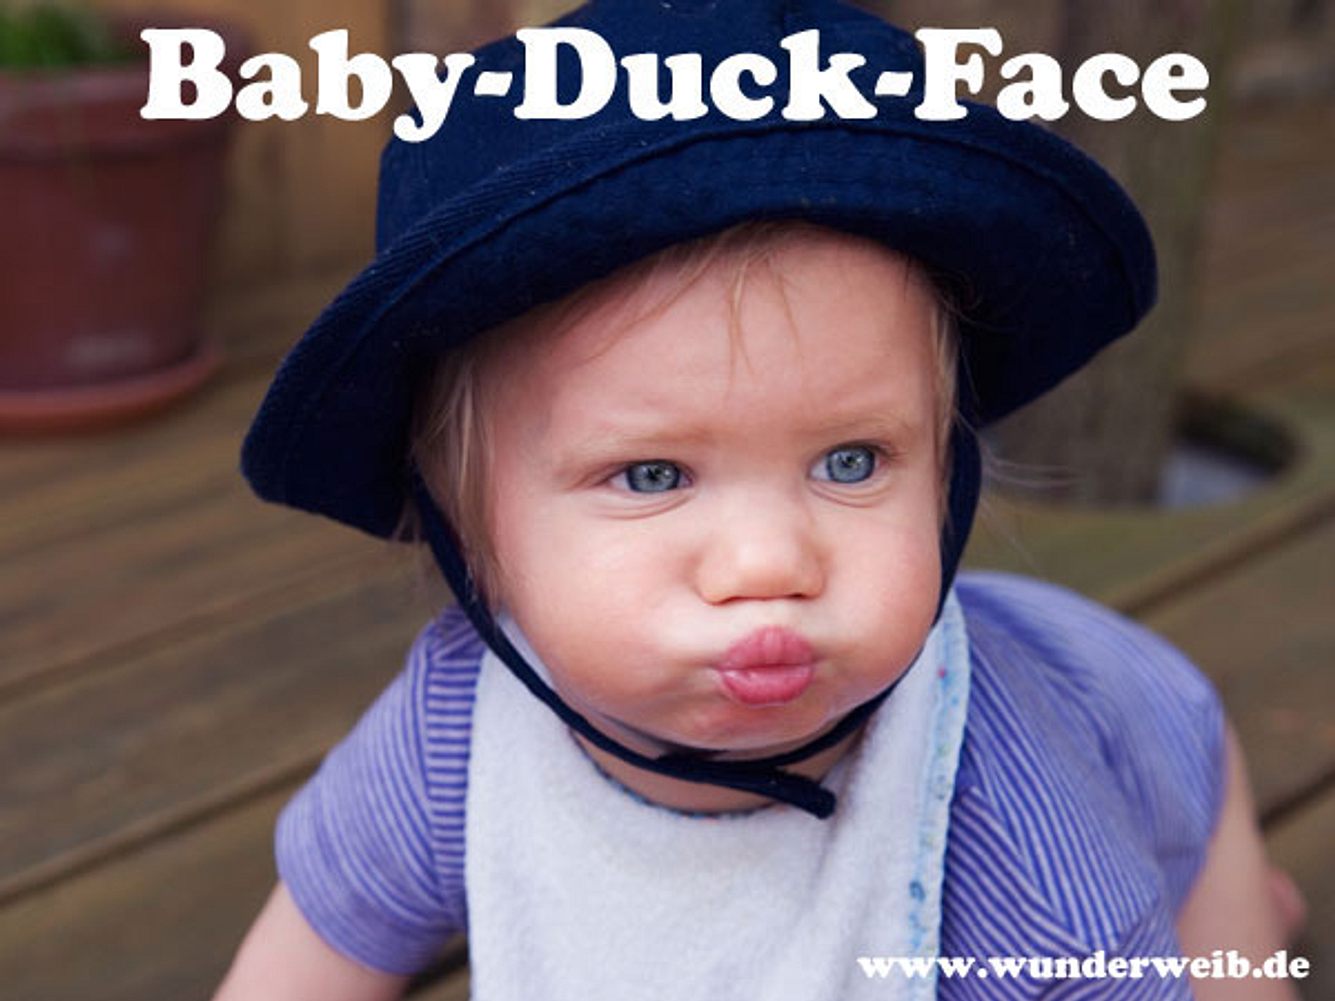 whatsapp bilder baby duck face b